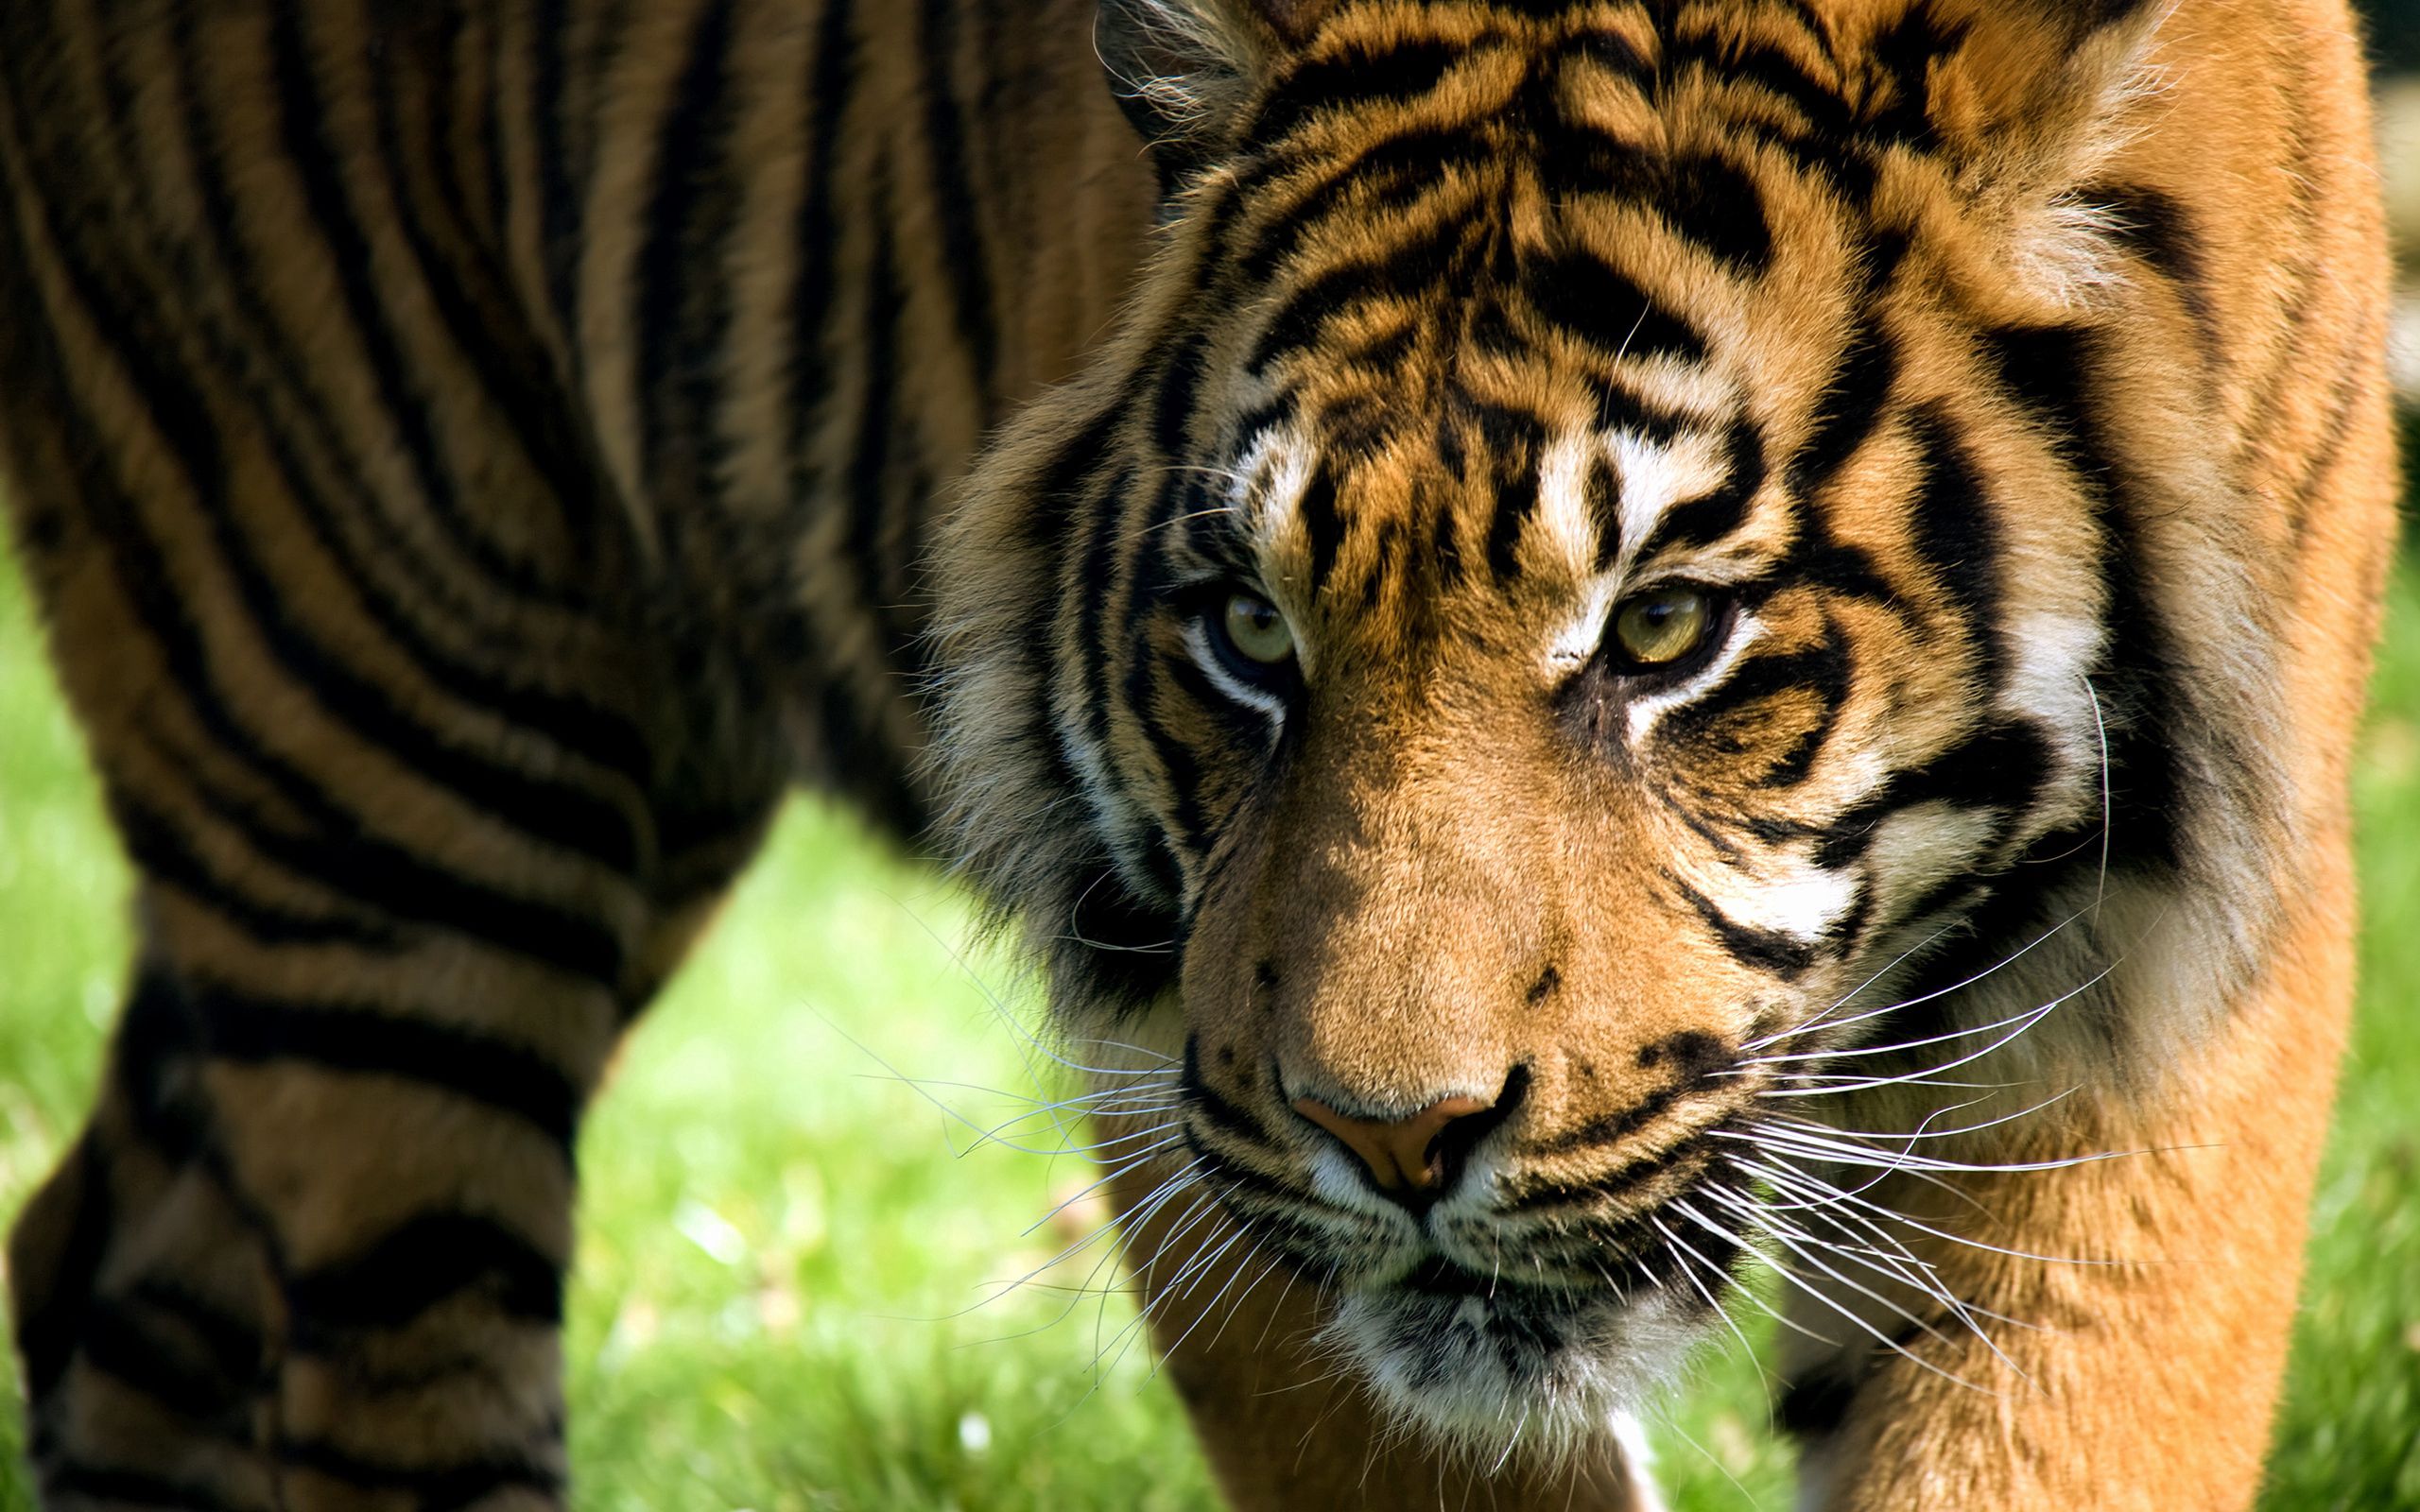 animals, aggression, striped, tiger, anger, amur tiger